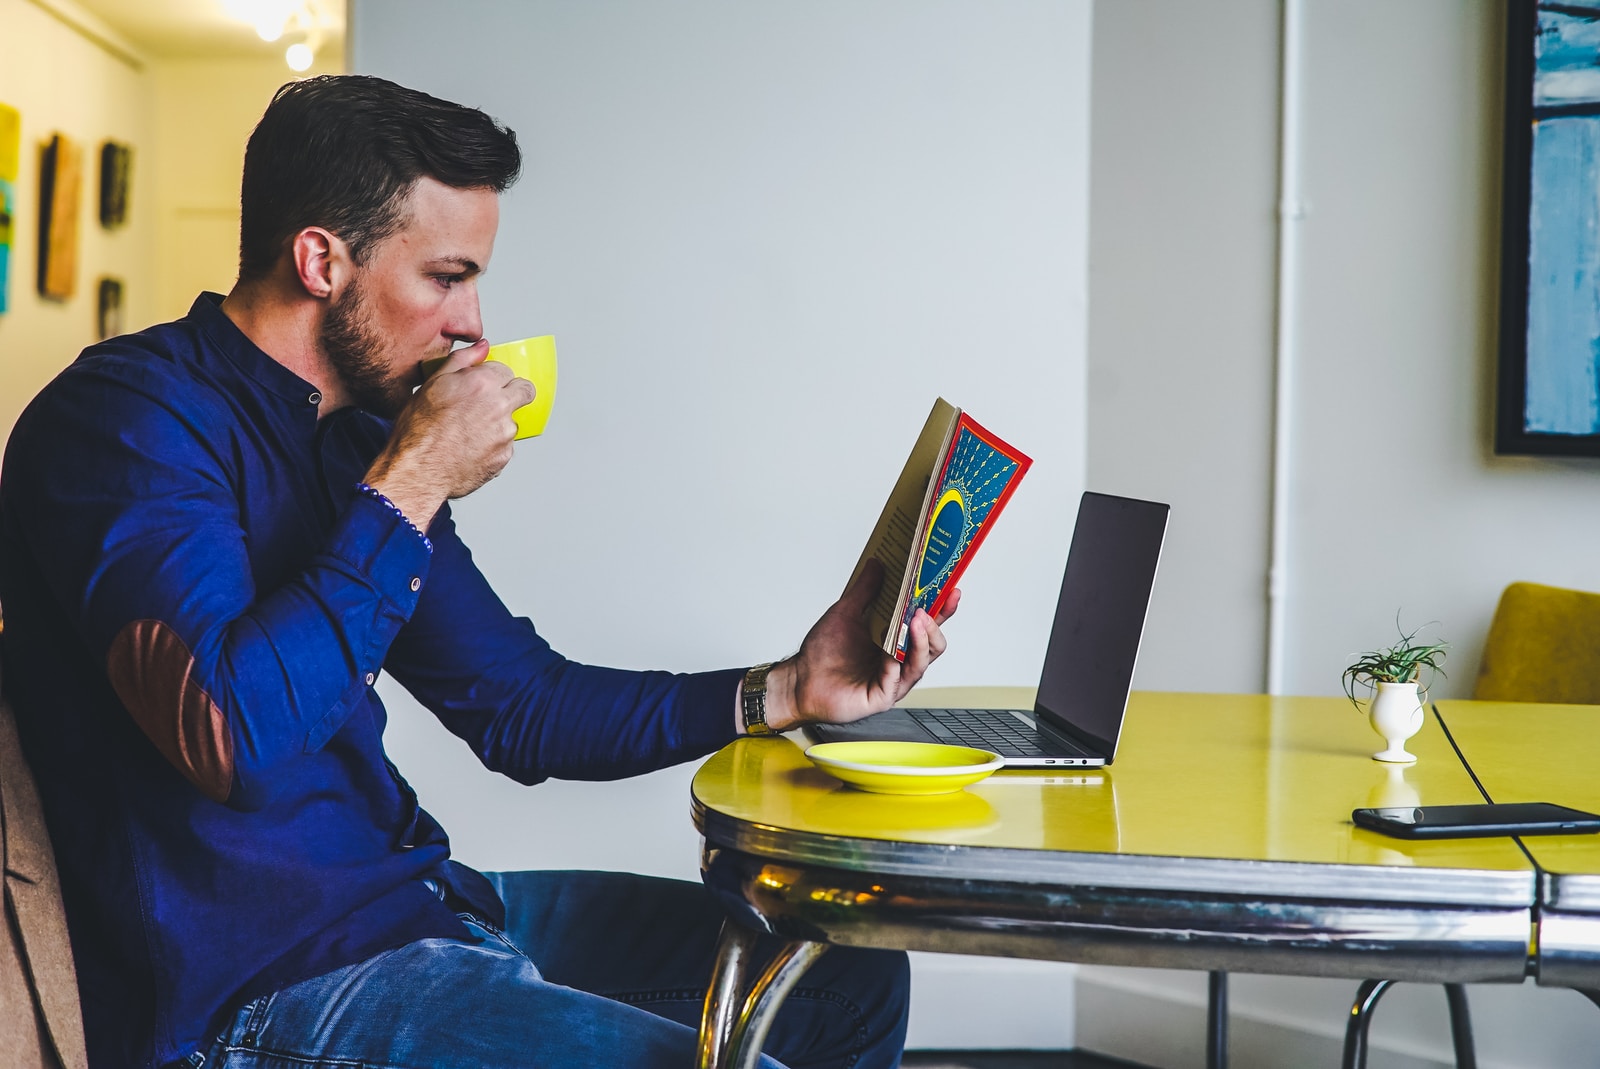 man drinking coffee in kitchen, reading book